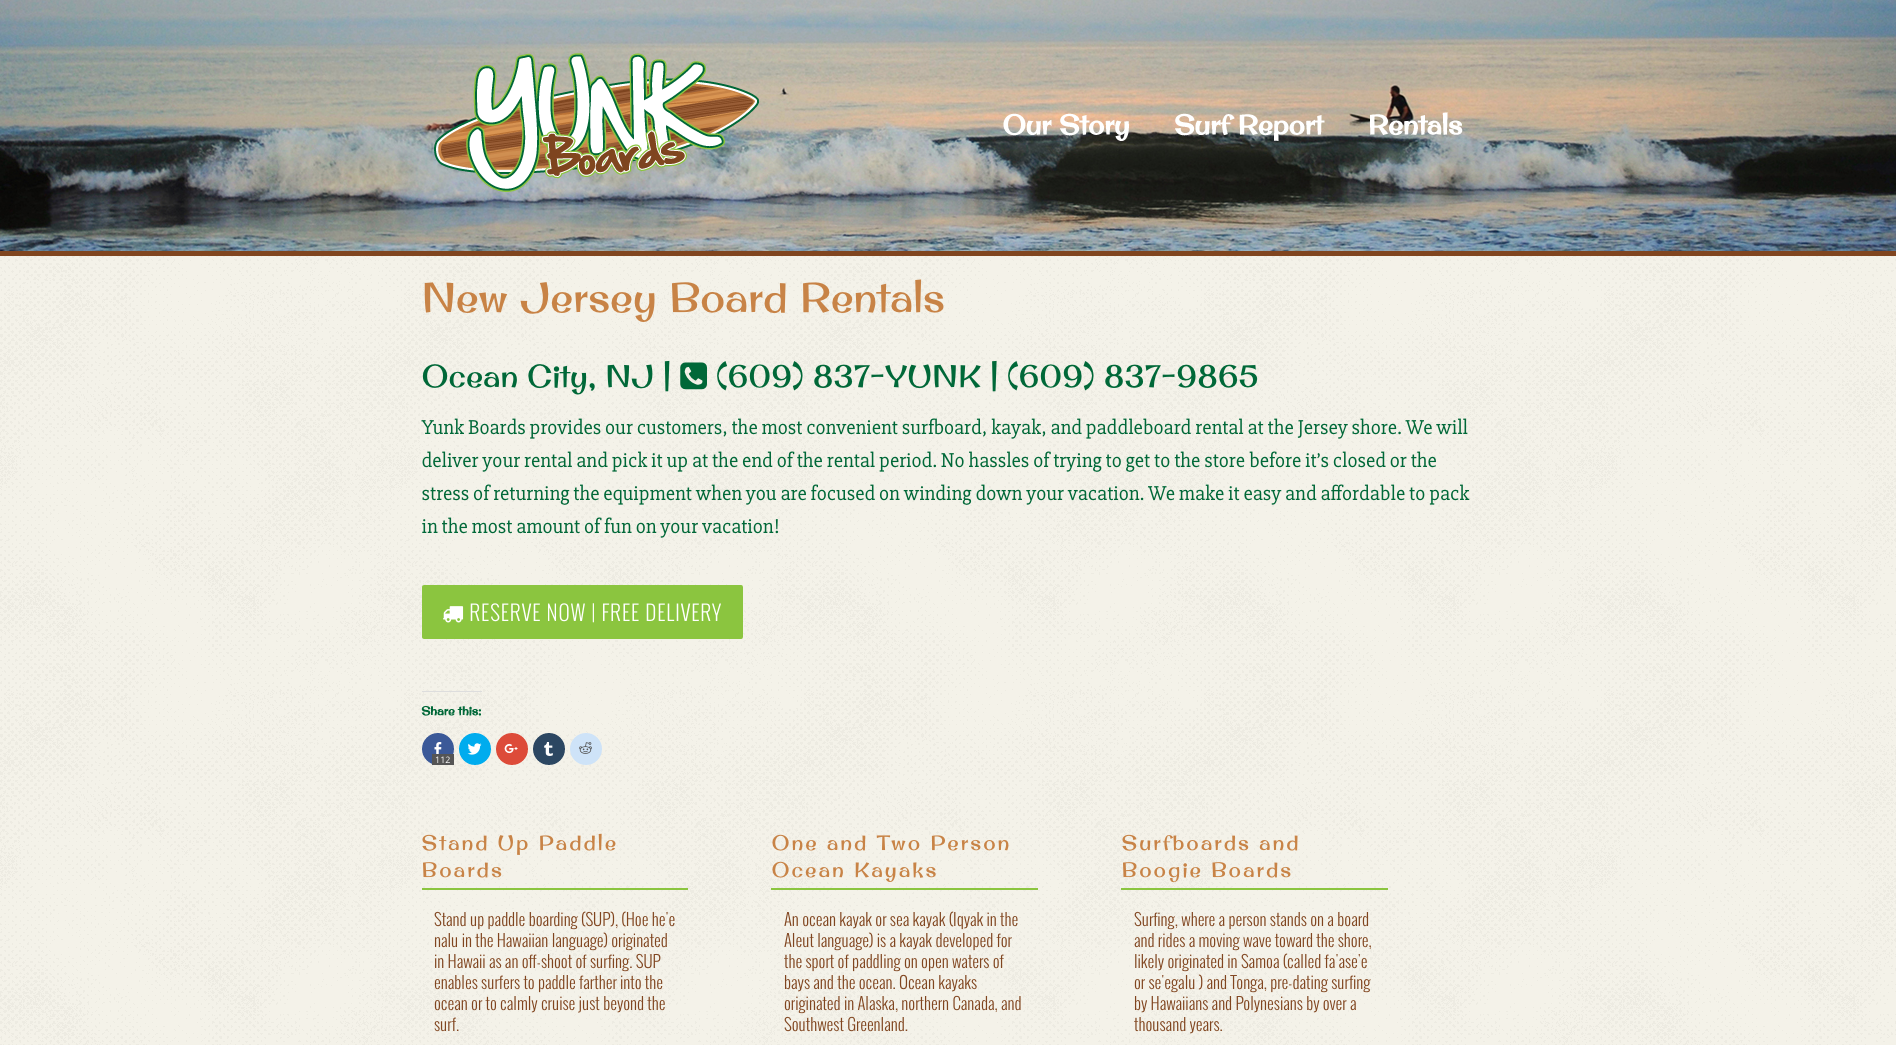 Website for Yunk Boards, designed by Adrian Hoppel